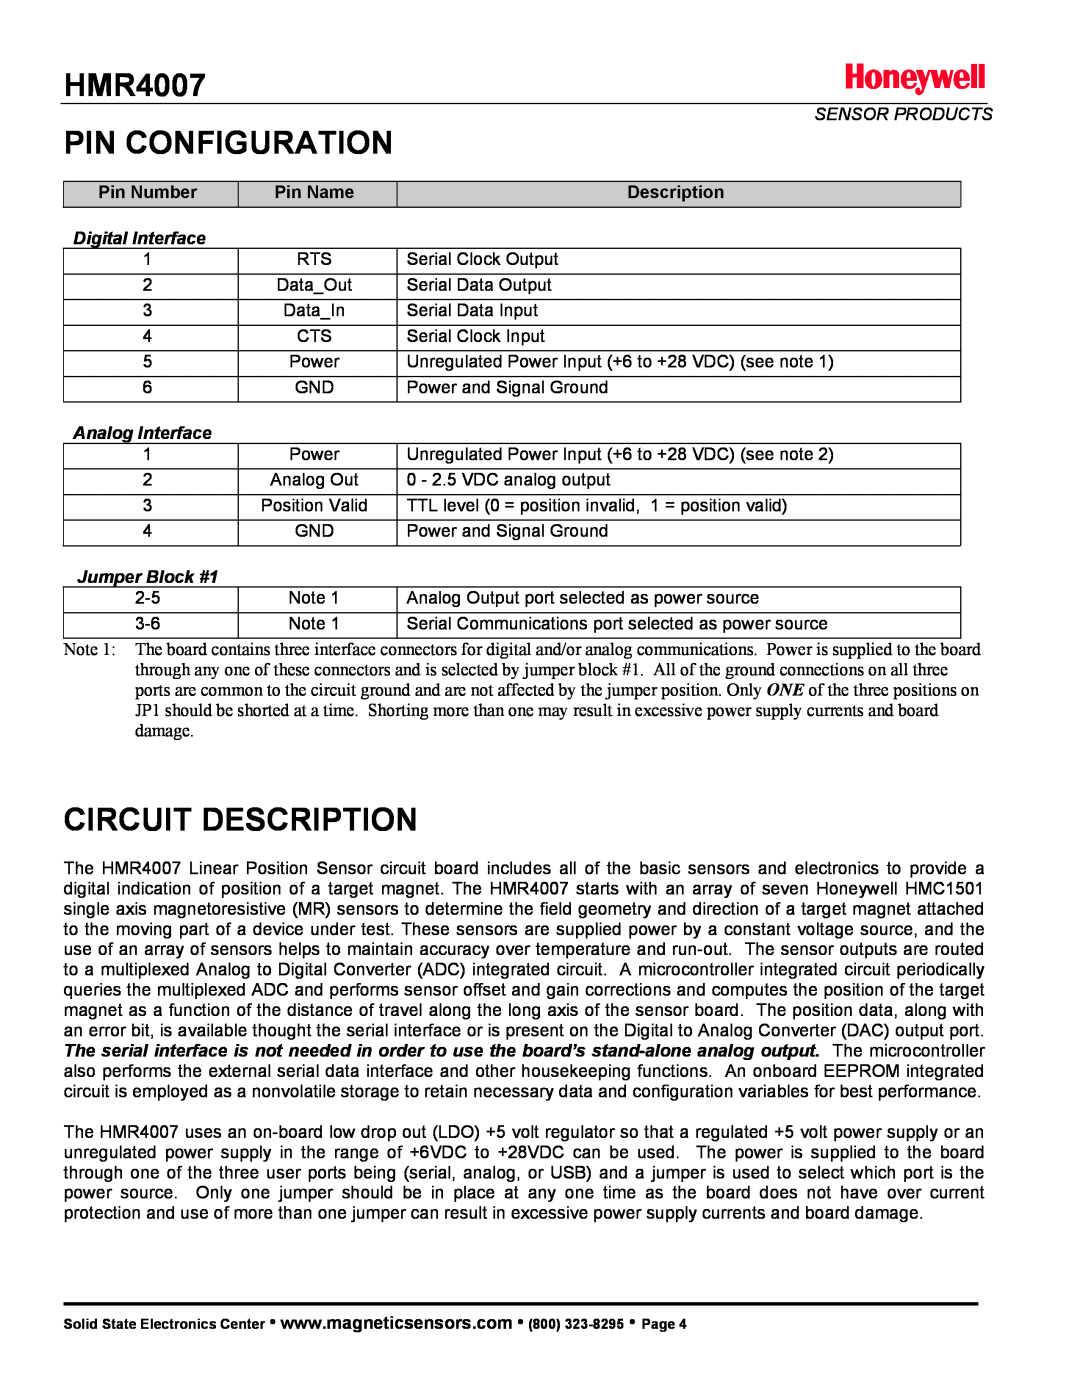 Honeywell HMR4007 manual Pin Configuration, Circuit Description, Pin Number, Pin Name, Jumper Block #1, Sensor Products 